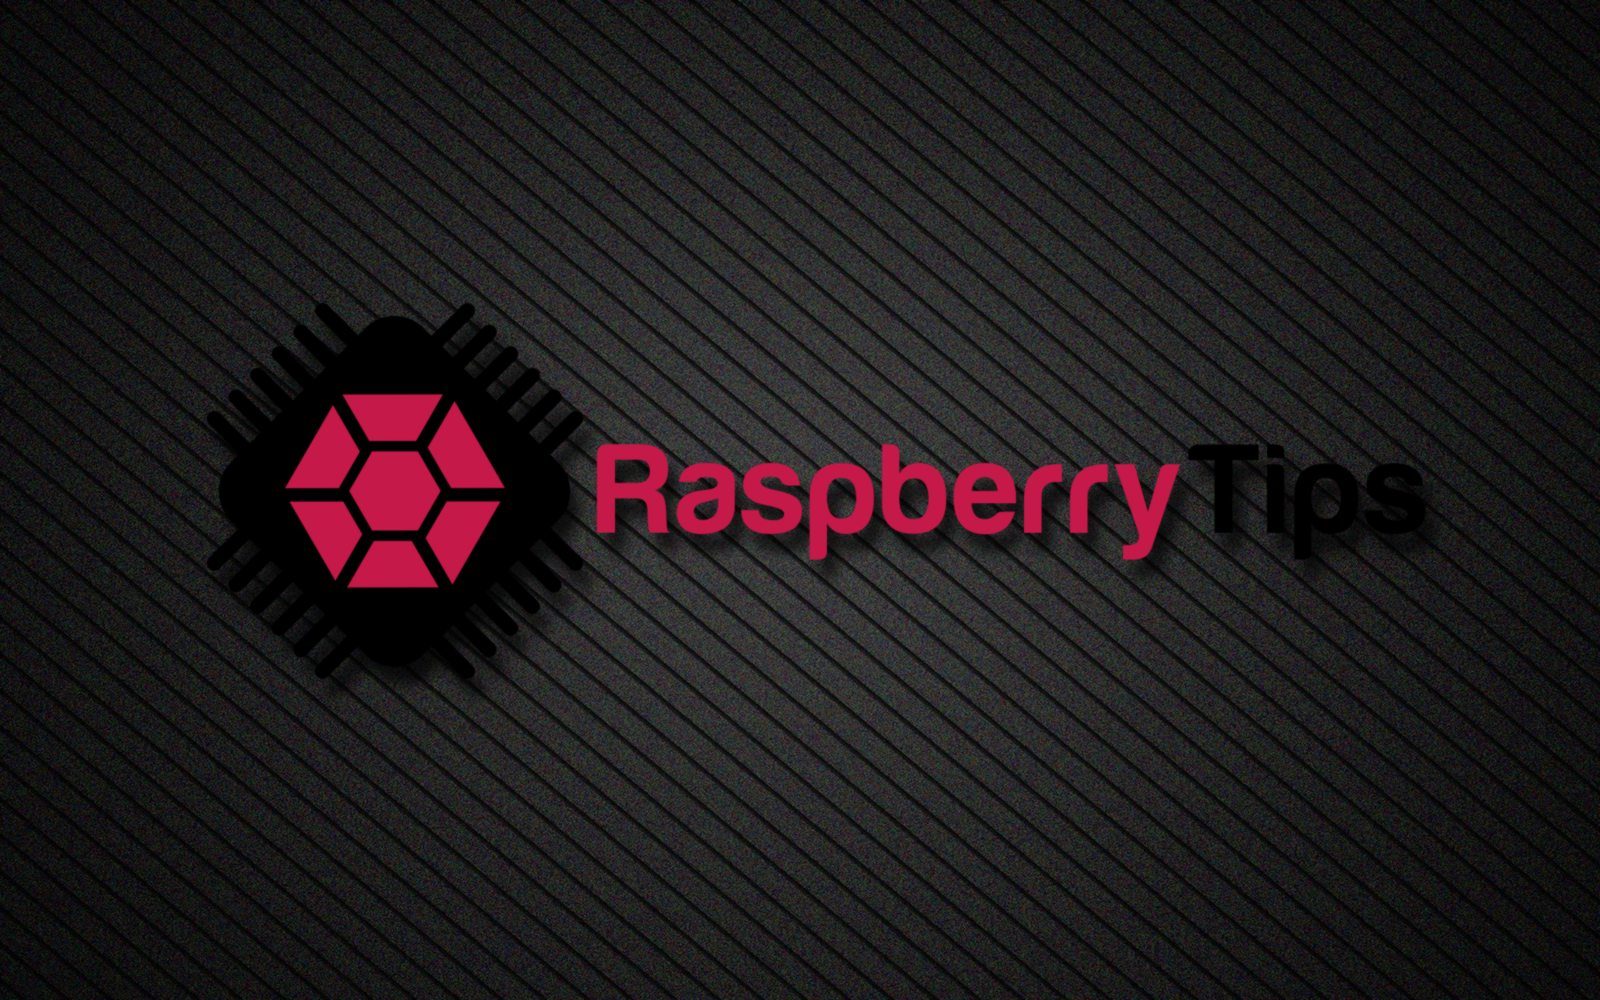 How To Change The Desktop Appearance On Raspberry Pi Raspberrytips